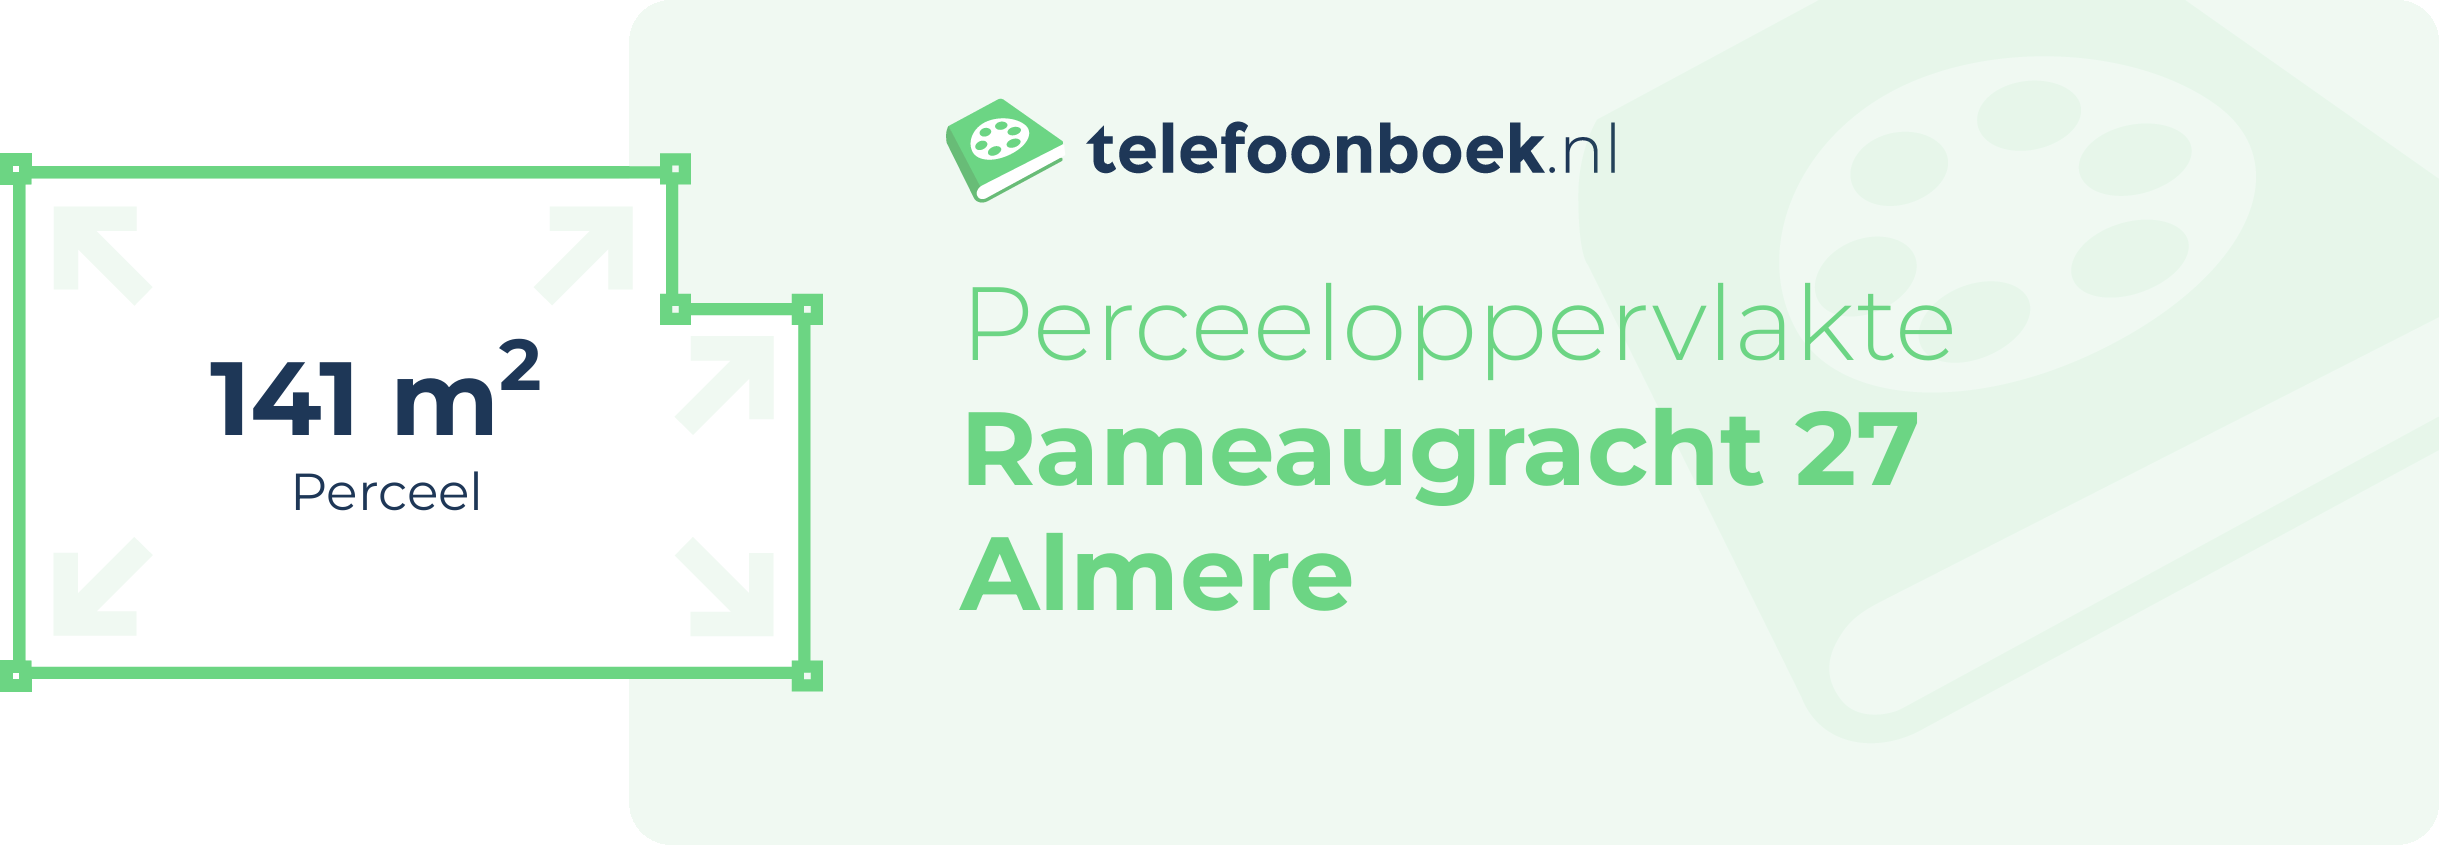 Perceeloppervlakte Rameaugracht 27 Almere